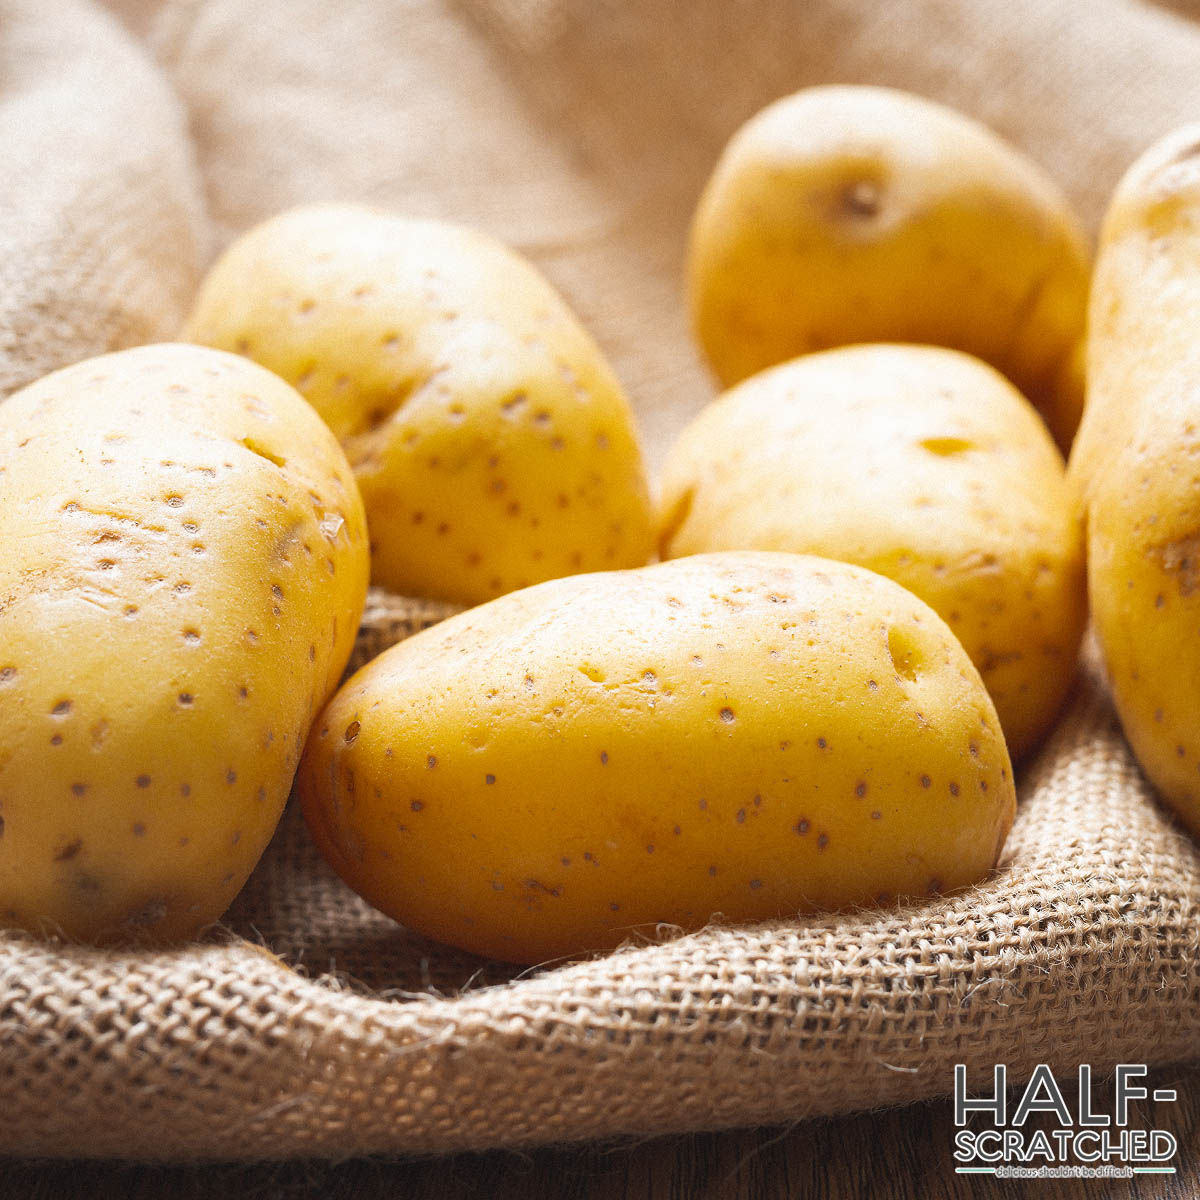 Yukon Gold potatoes